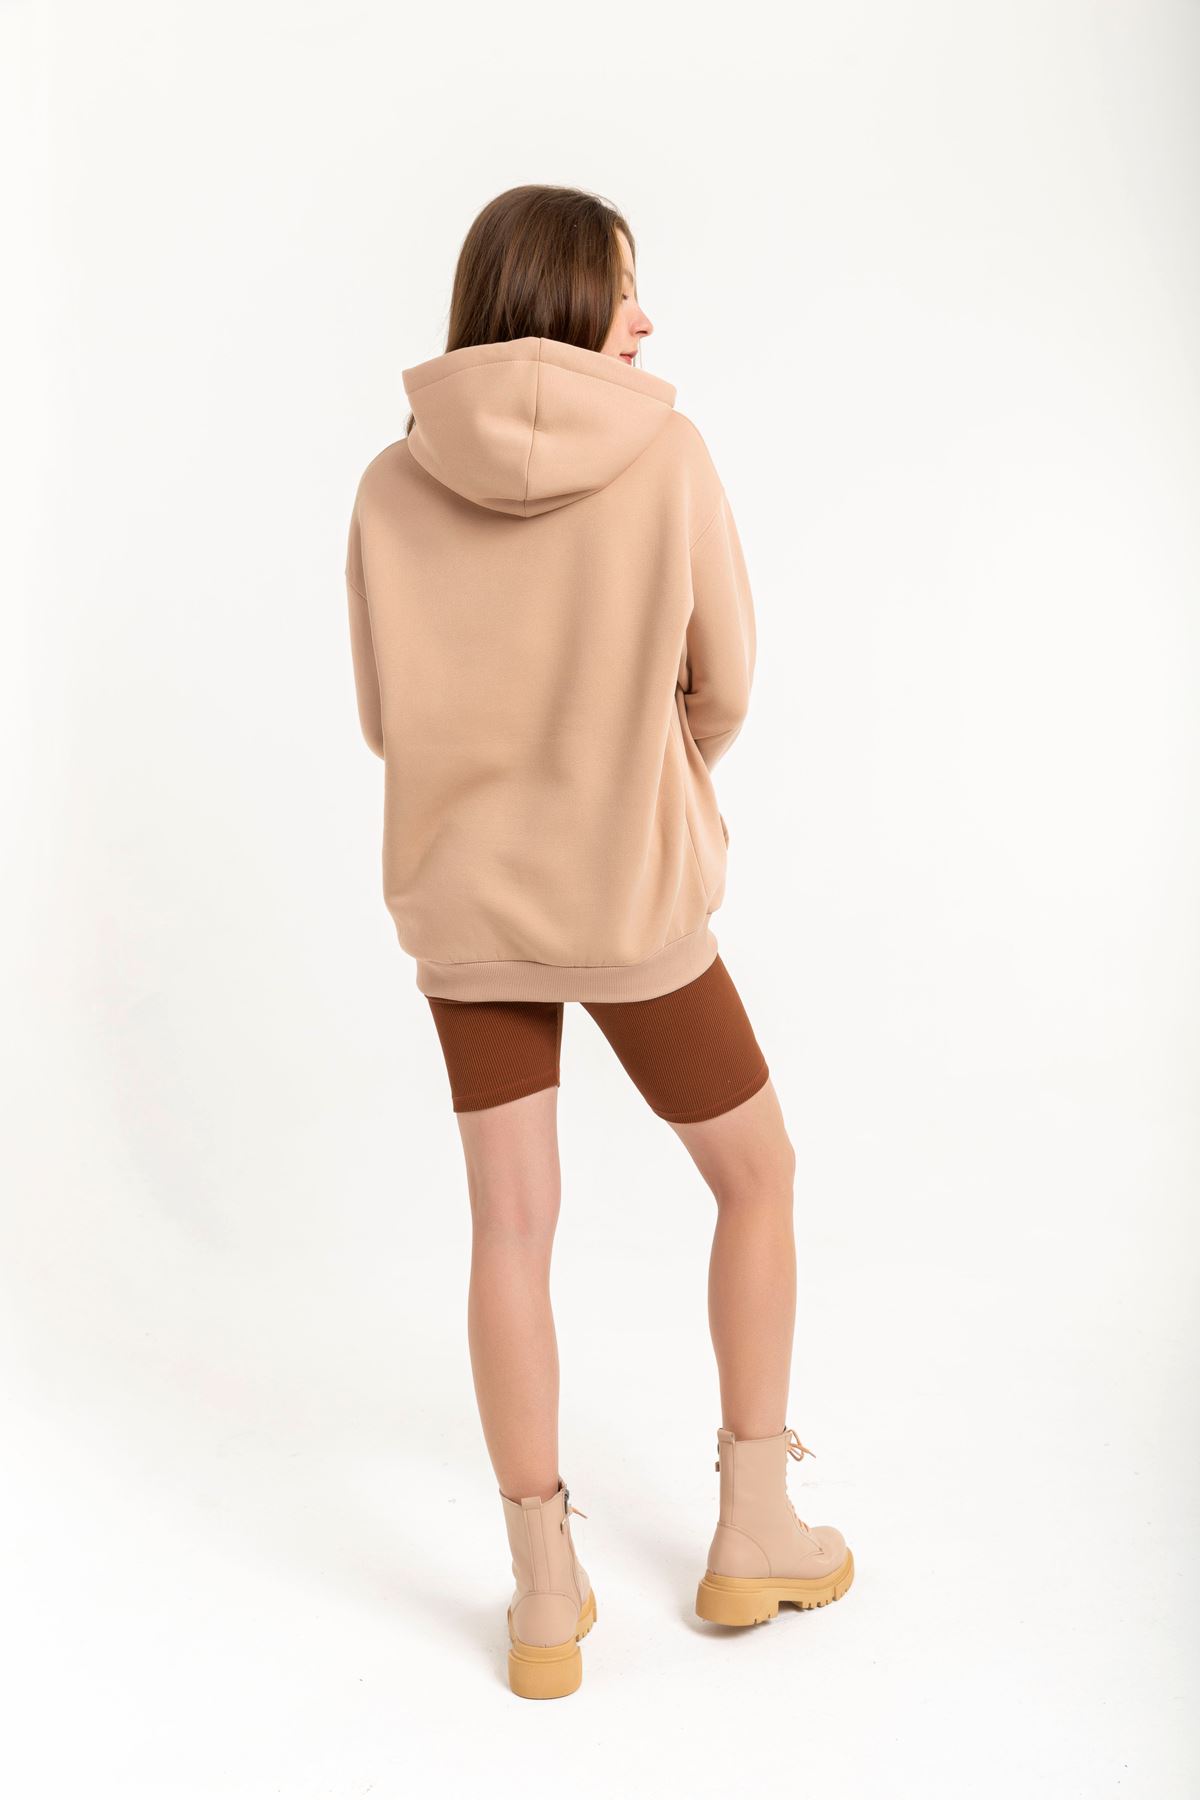 Jesica Fabric Long Sleeve Hooded Oversize Zip Women Sweatshirt - Beige 